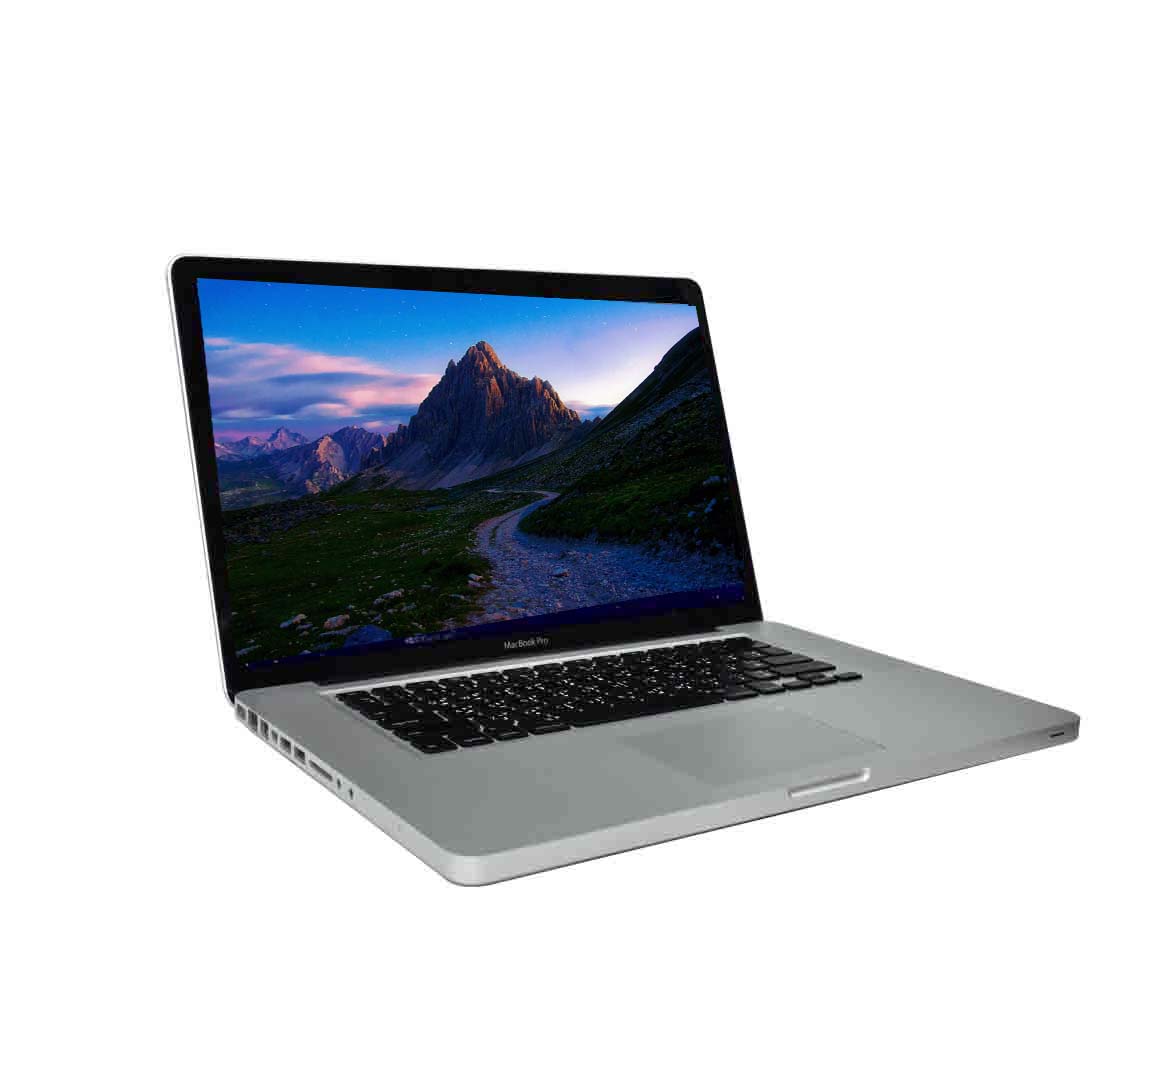 Apple MacBook A1286 Business Laptop, Intel Core i7-3rd Gen, 4GB RAM, 500GB HDD, NVIDIA GeForce , 15 Inch Display, Refurbished Laptop